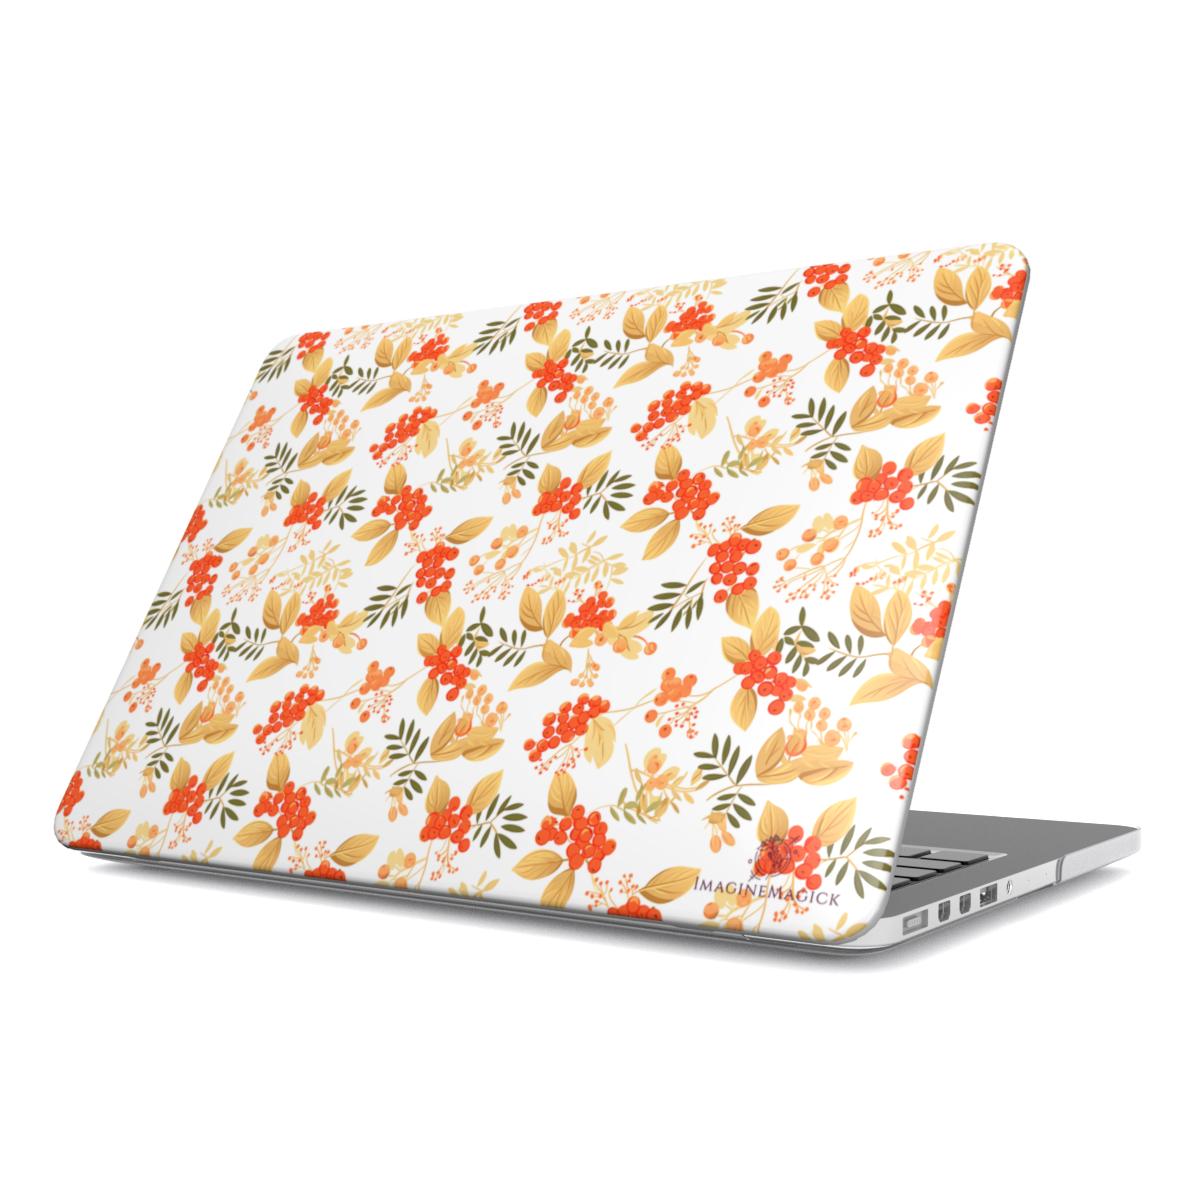 MacBook Enchantment - The cleansing rowan